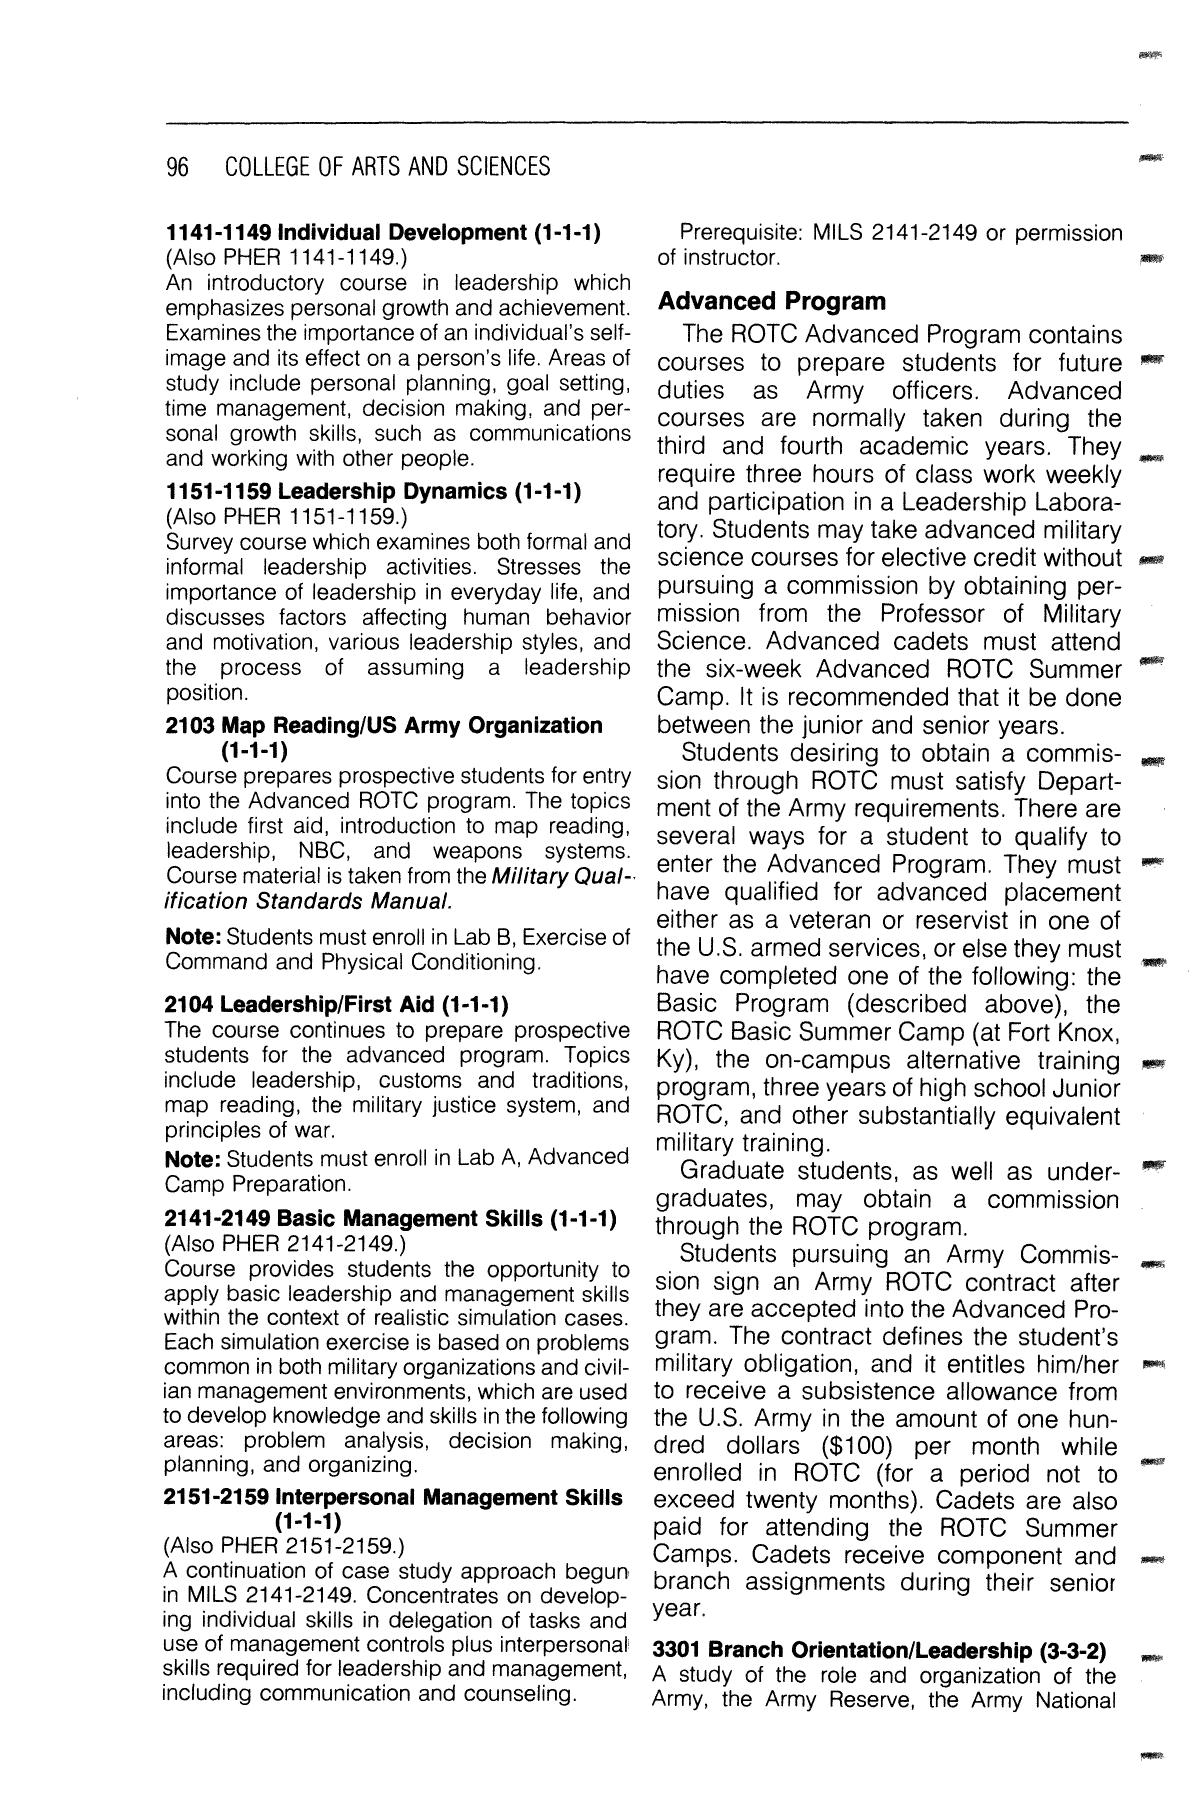 Catalog of Hardin-Simmons University, 1985-1986 Undergraduate Bulletin
                                                
                                                    96
                                                